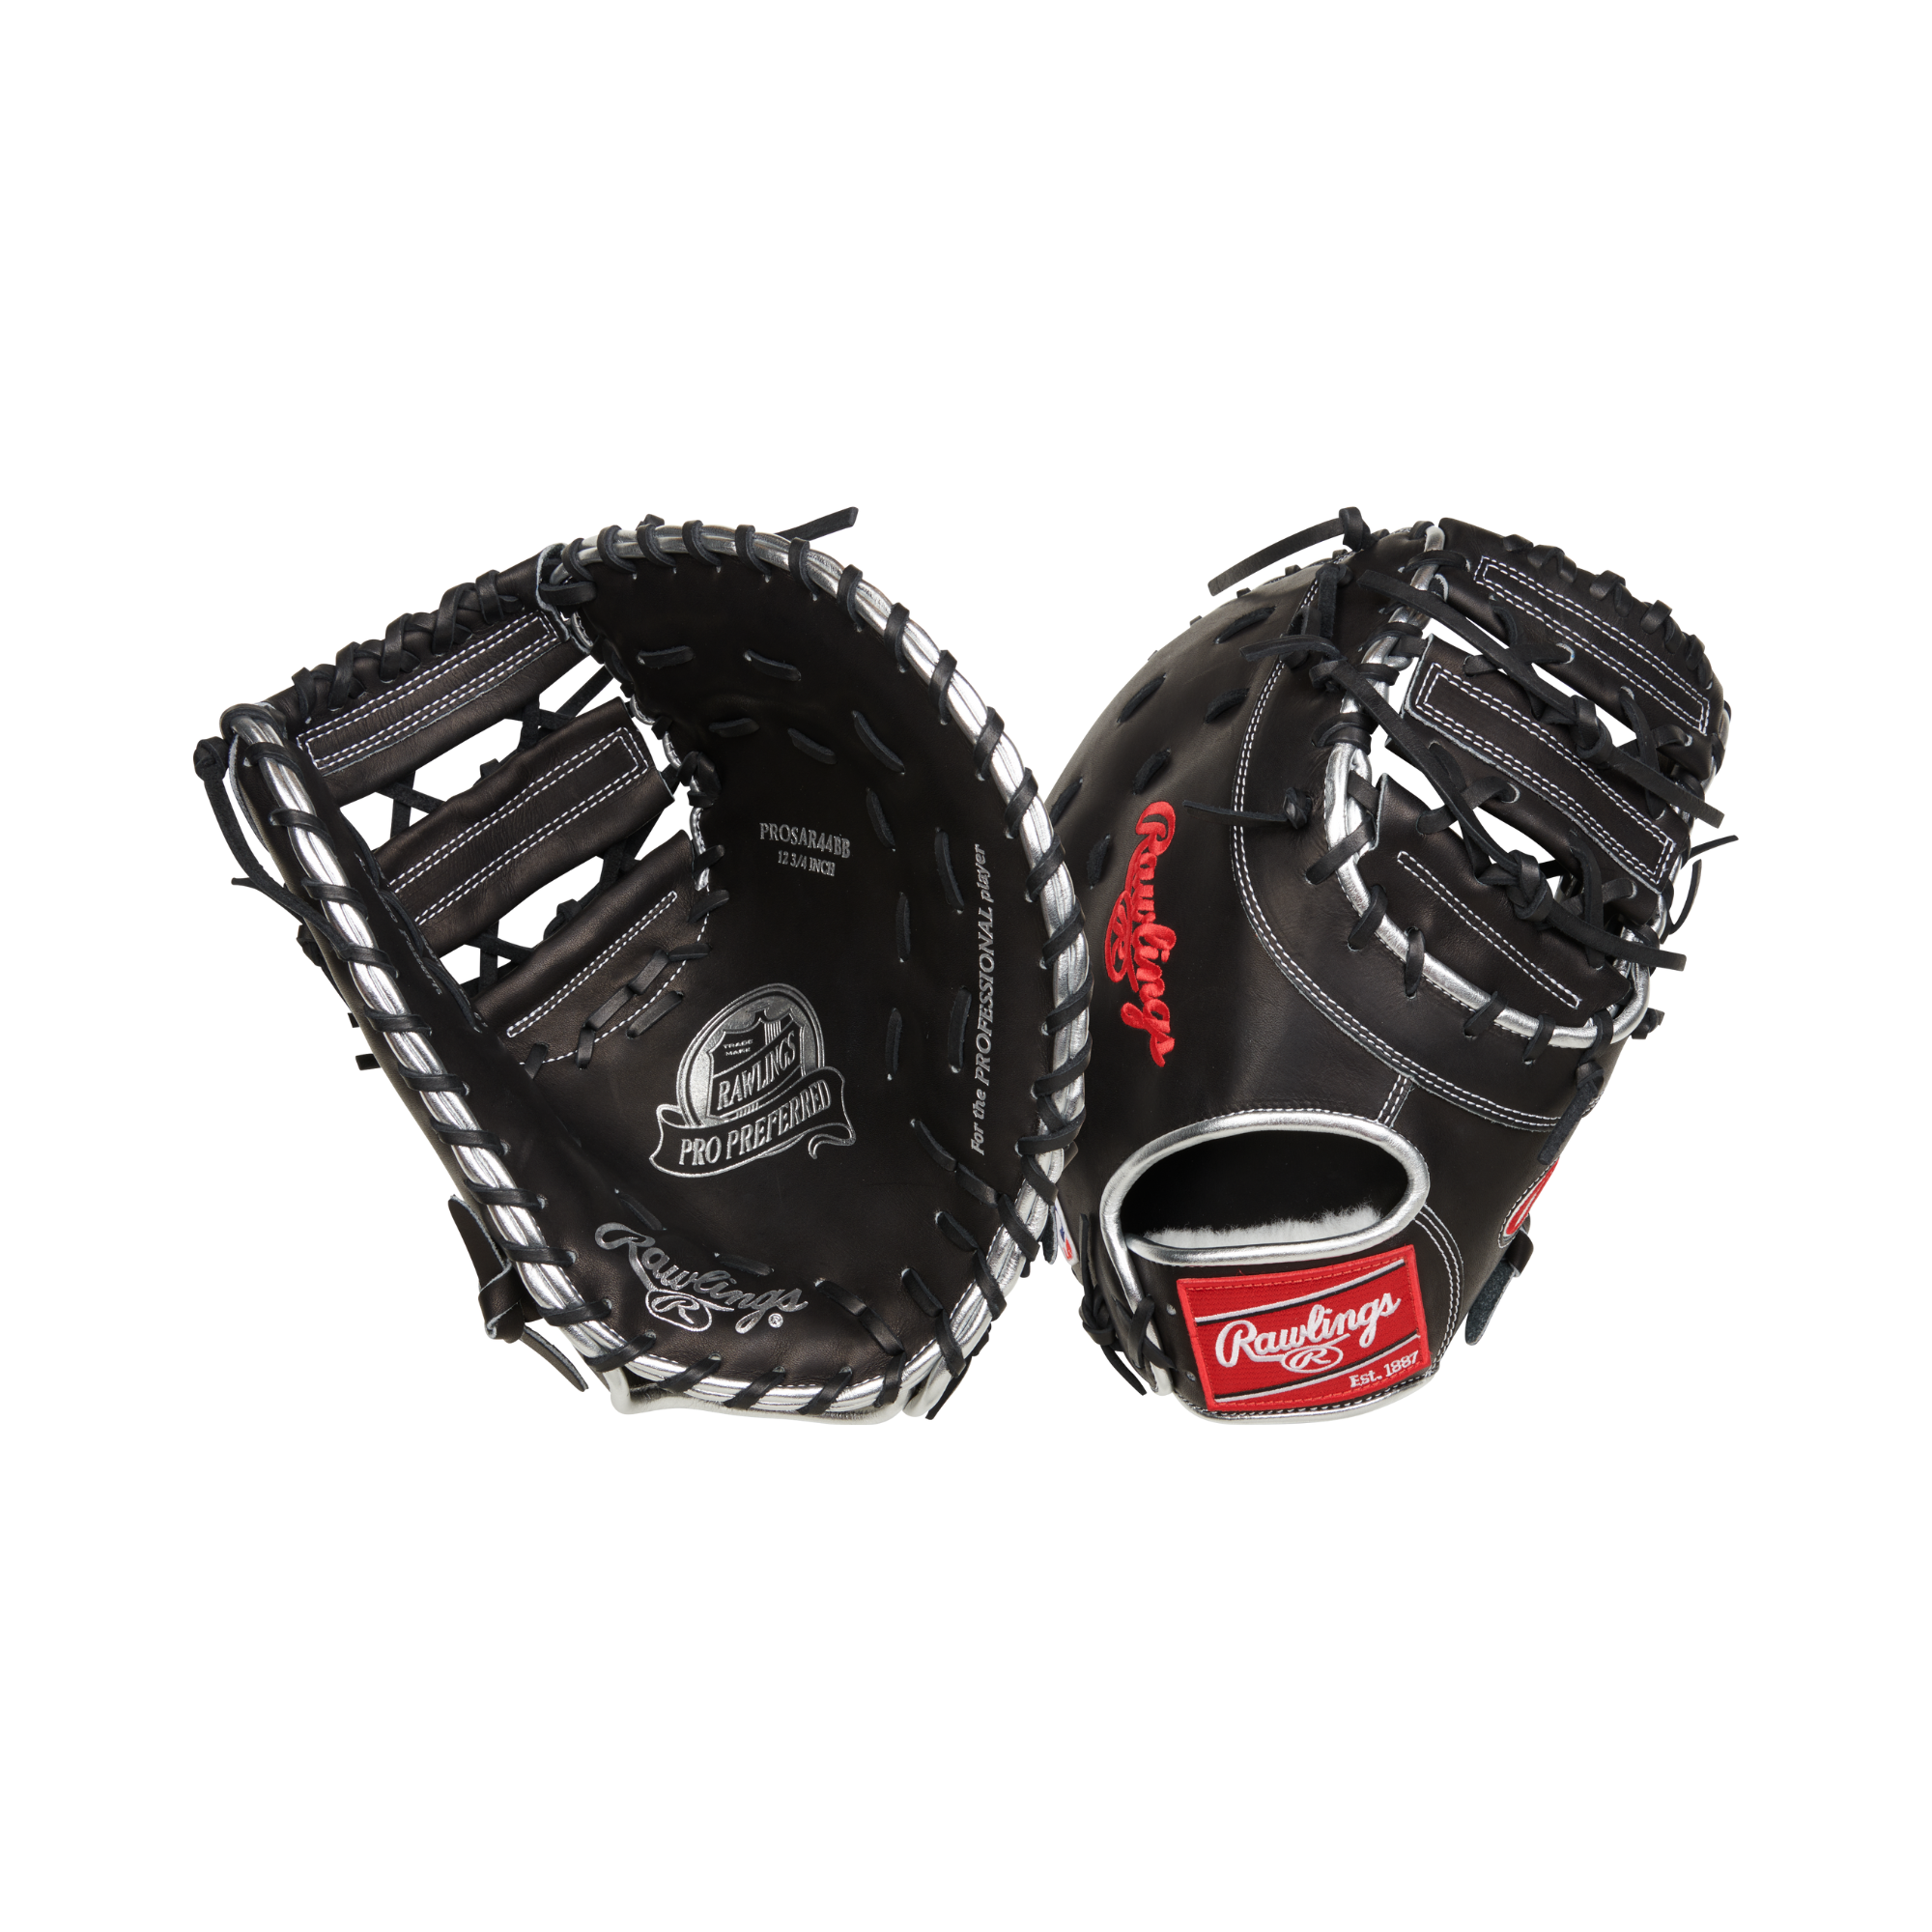 Rawlings Pro Preferred Series First Base Mitt Baseball Glove 12.75"LHT